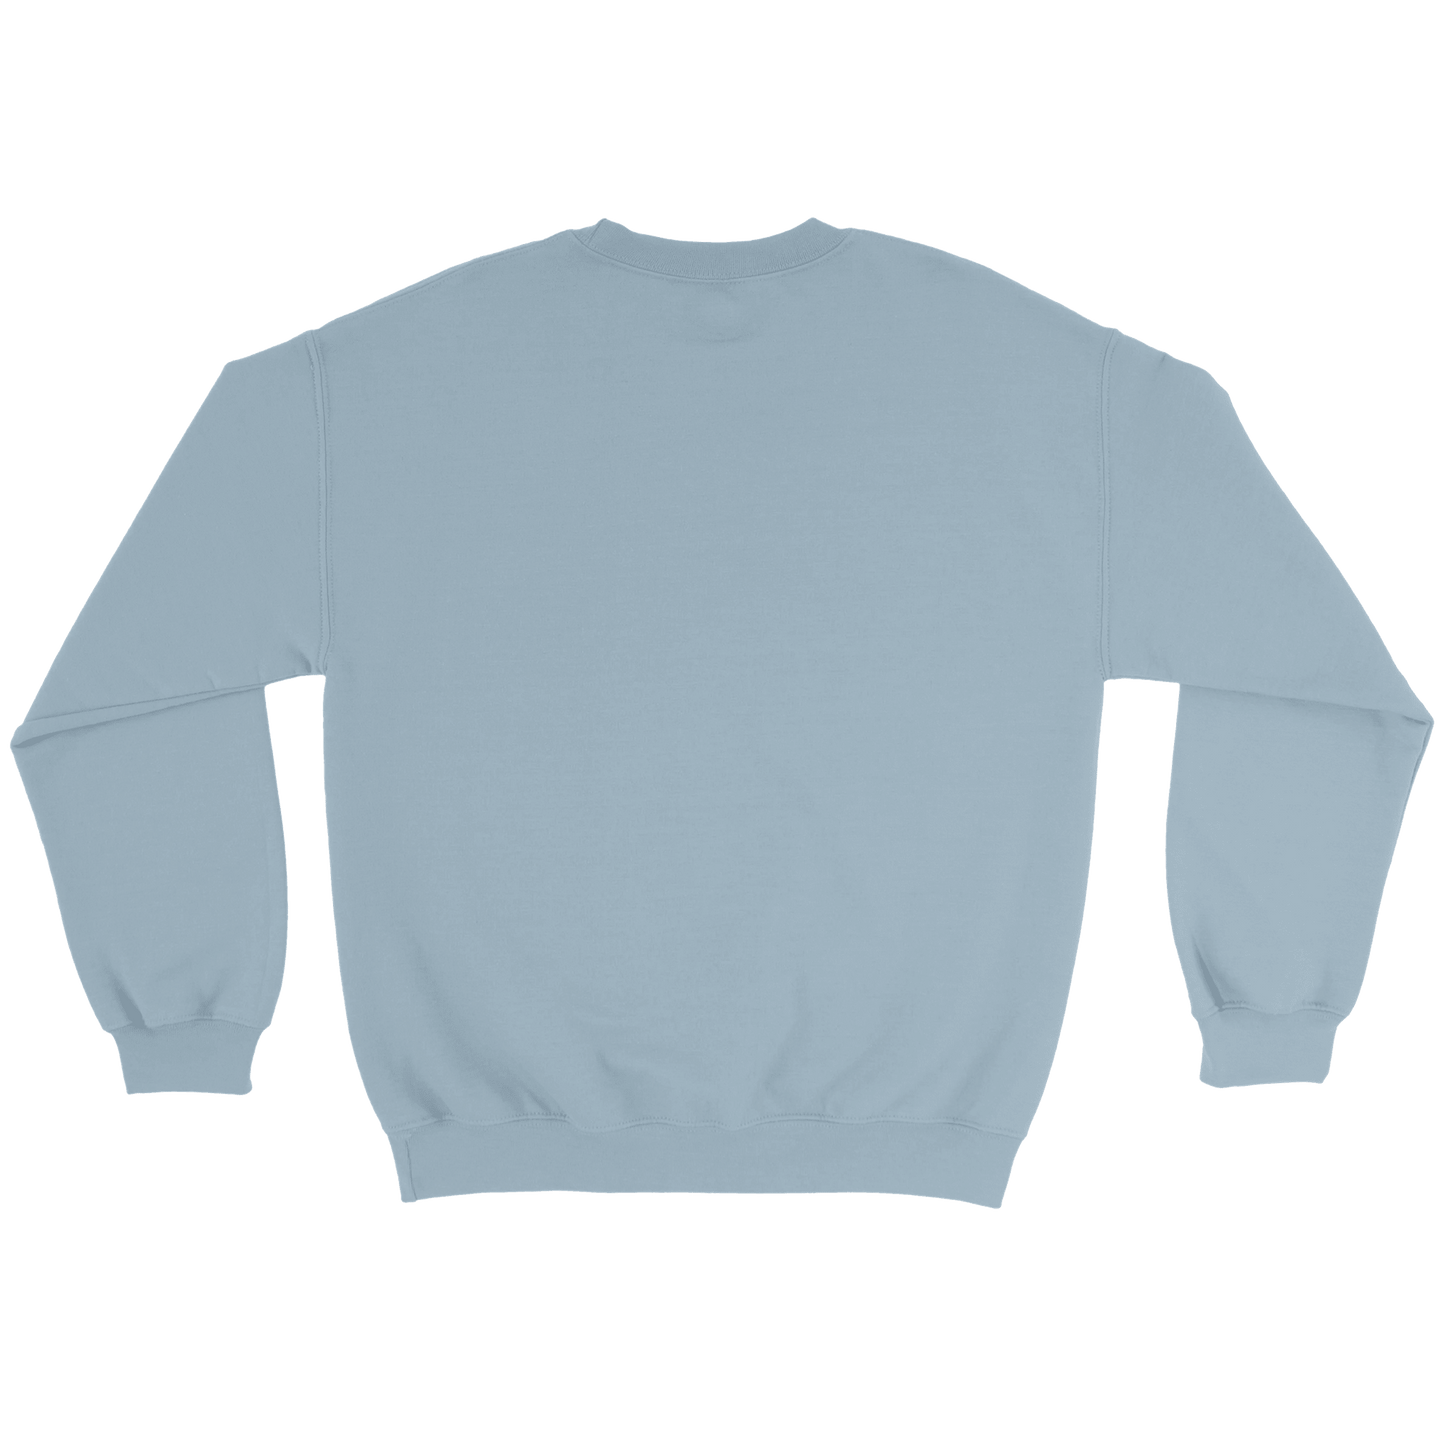 Långburk Fan Club Norrland Edition - Sweatshirt 